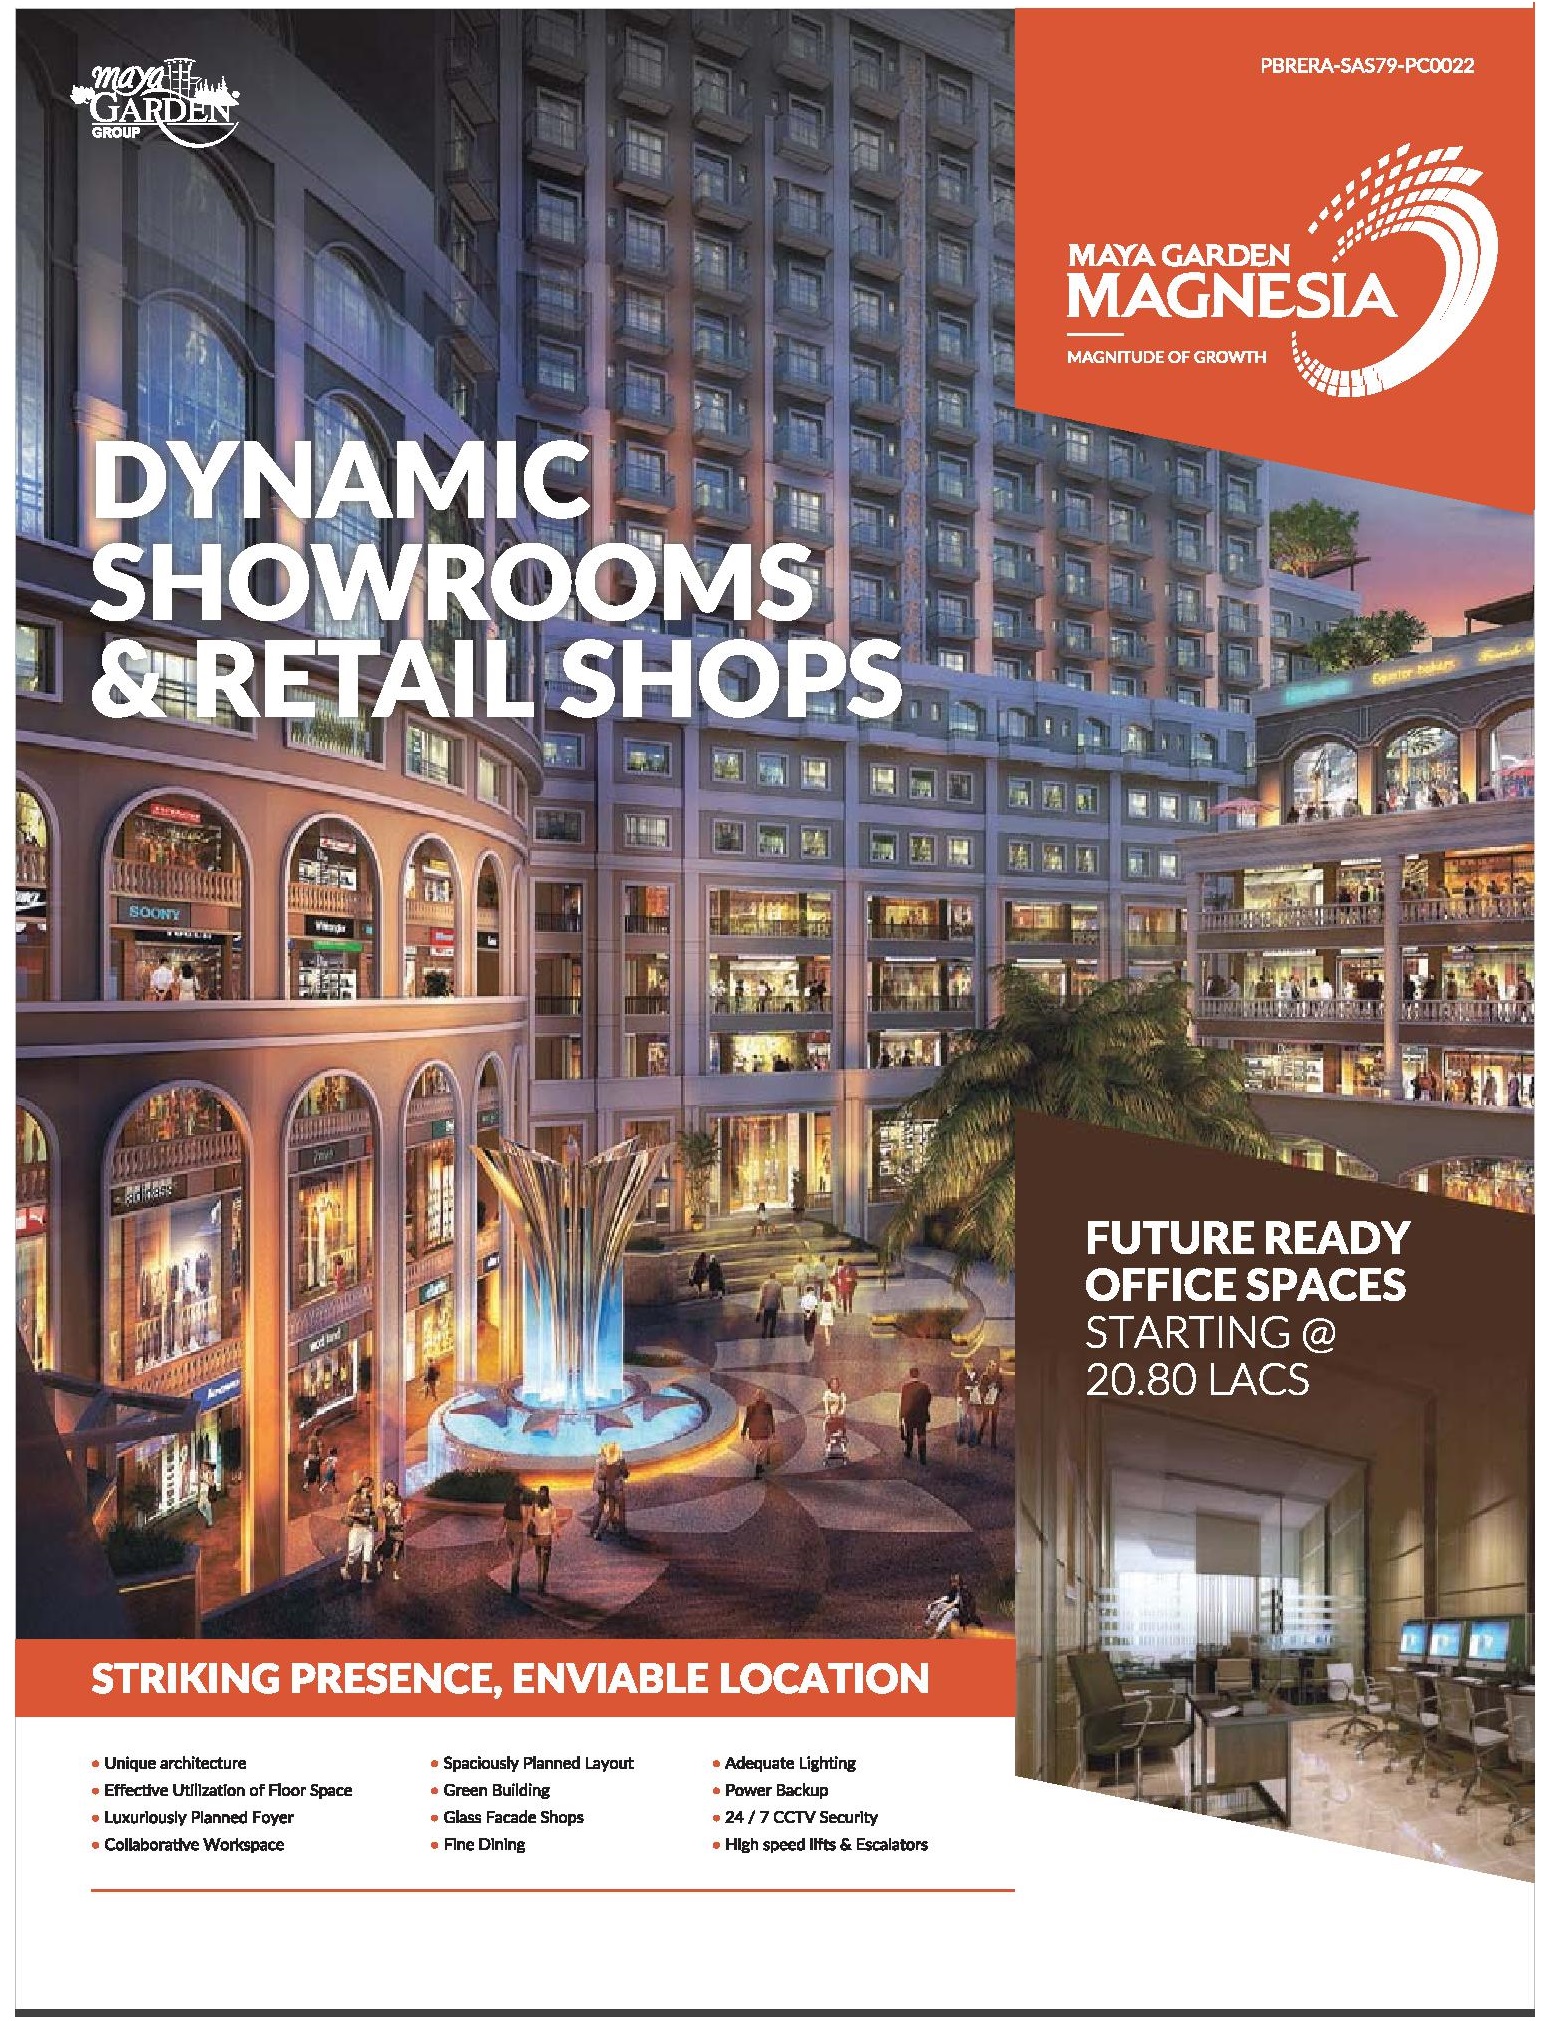 Launching dynamic showrooms & retail shops at Maya Garden Magnesia in Zirakpur, Chandigarh